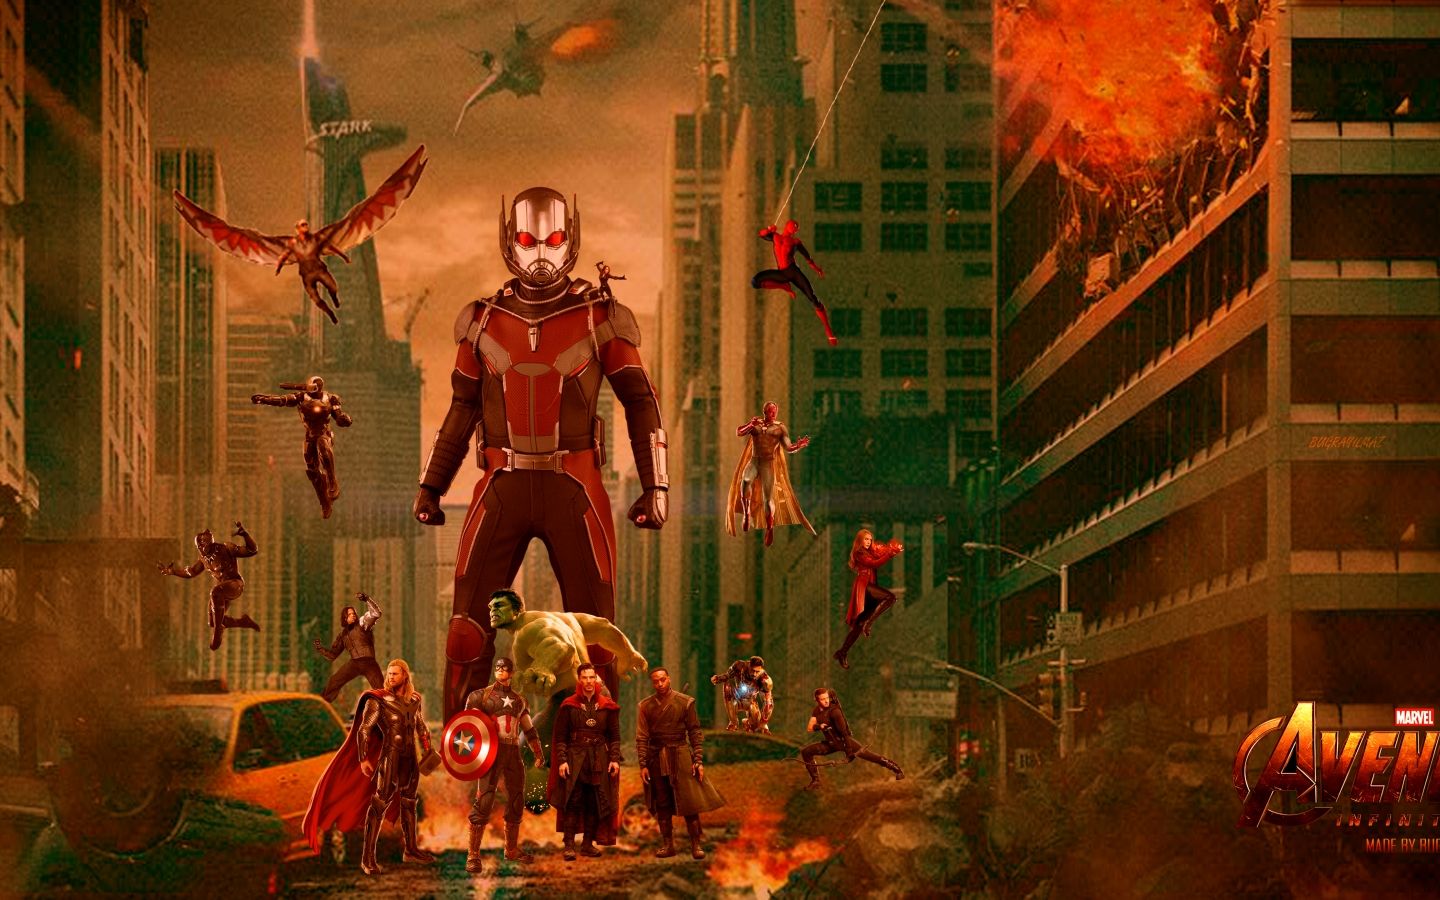 Download Avengers Infinity War Fan Art Widescreen 4:5 wallpaper 1440x900